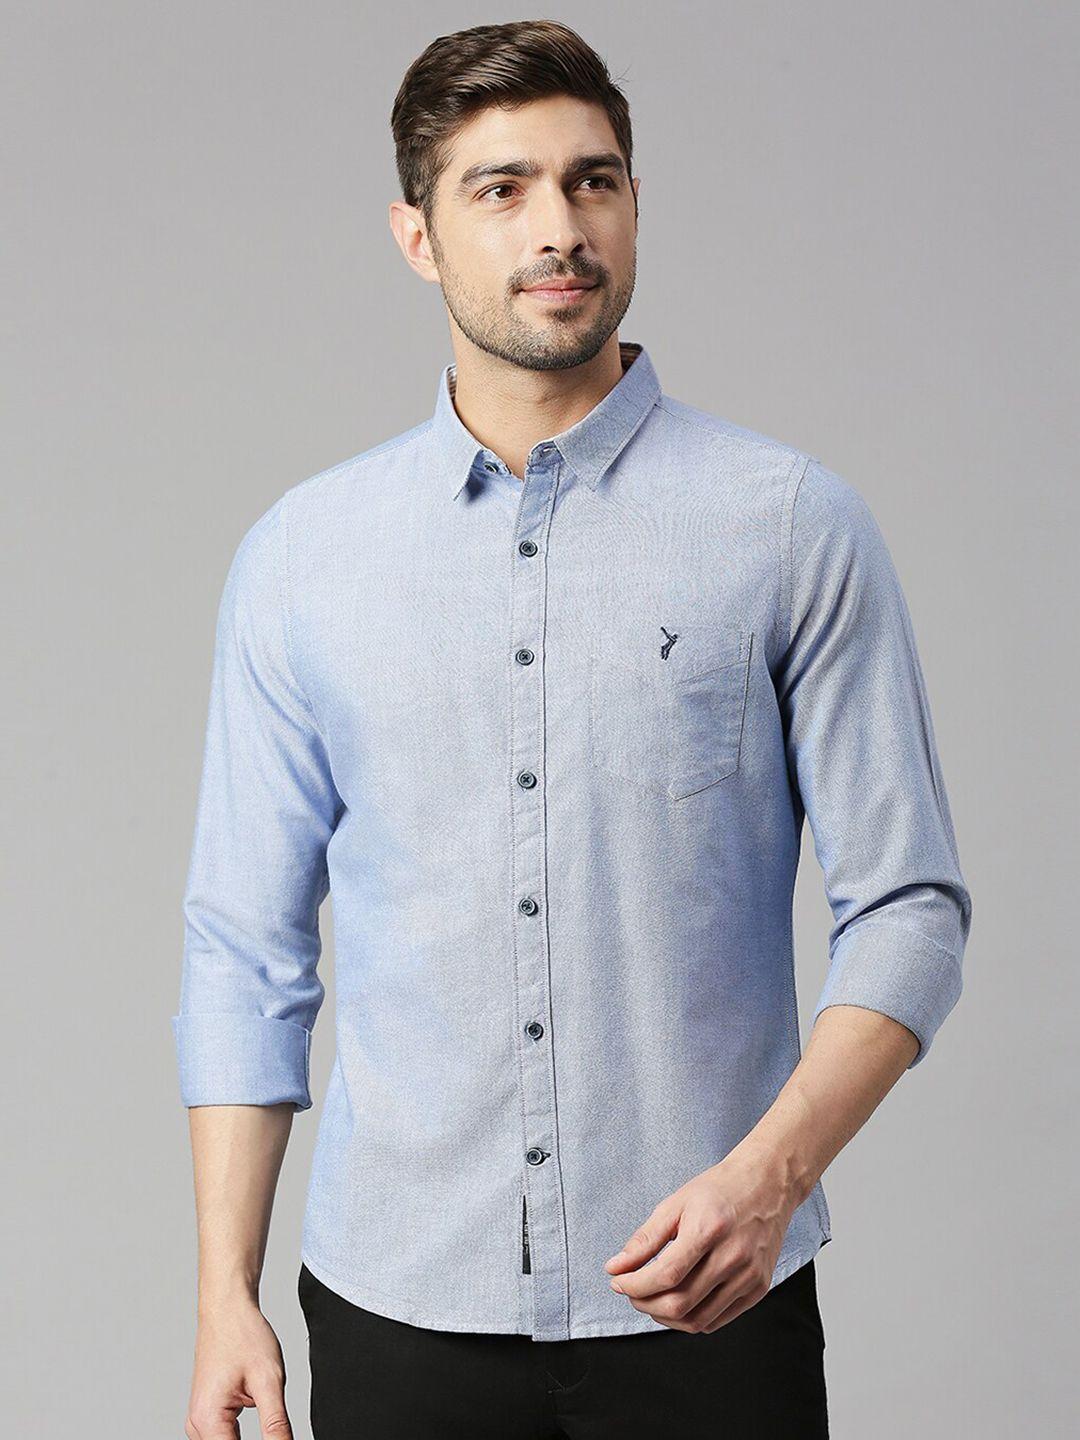 thomas scott classic slim fit opaque pure cotton casual shirt